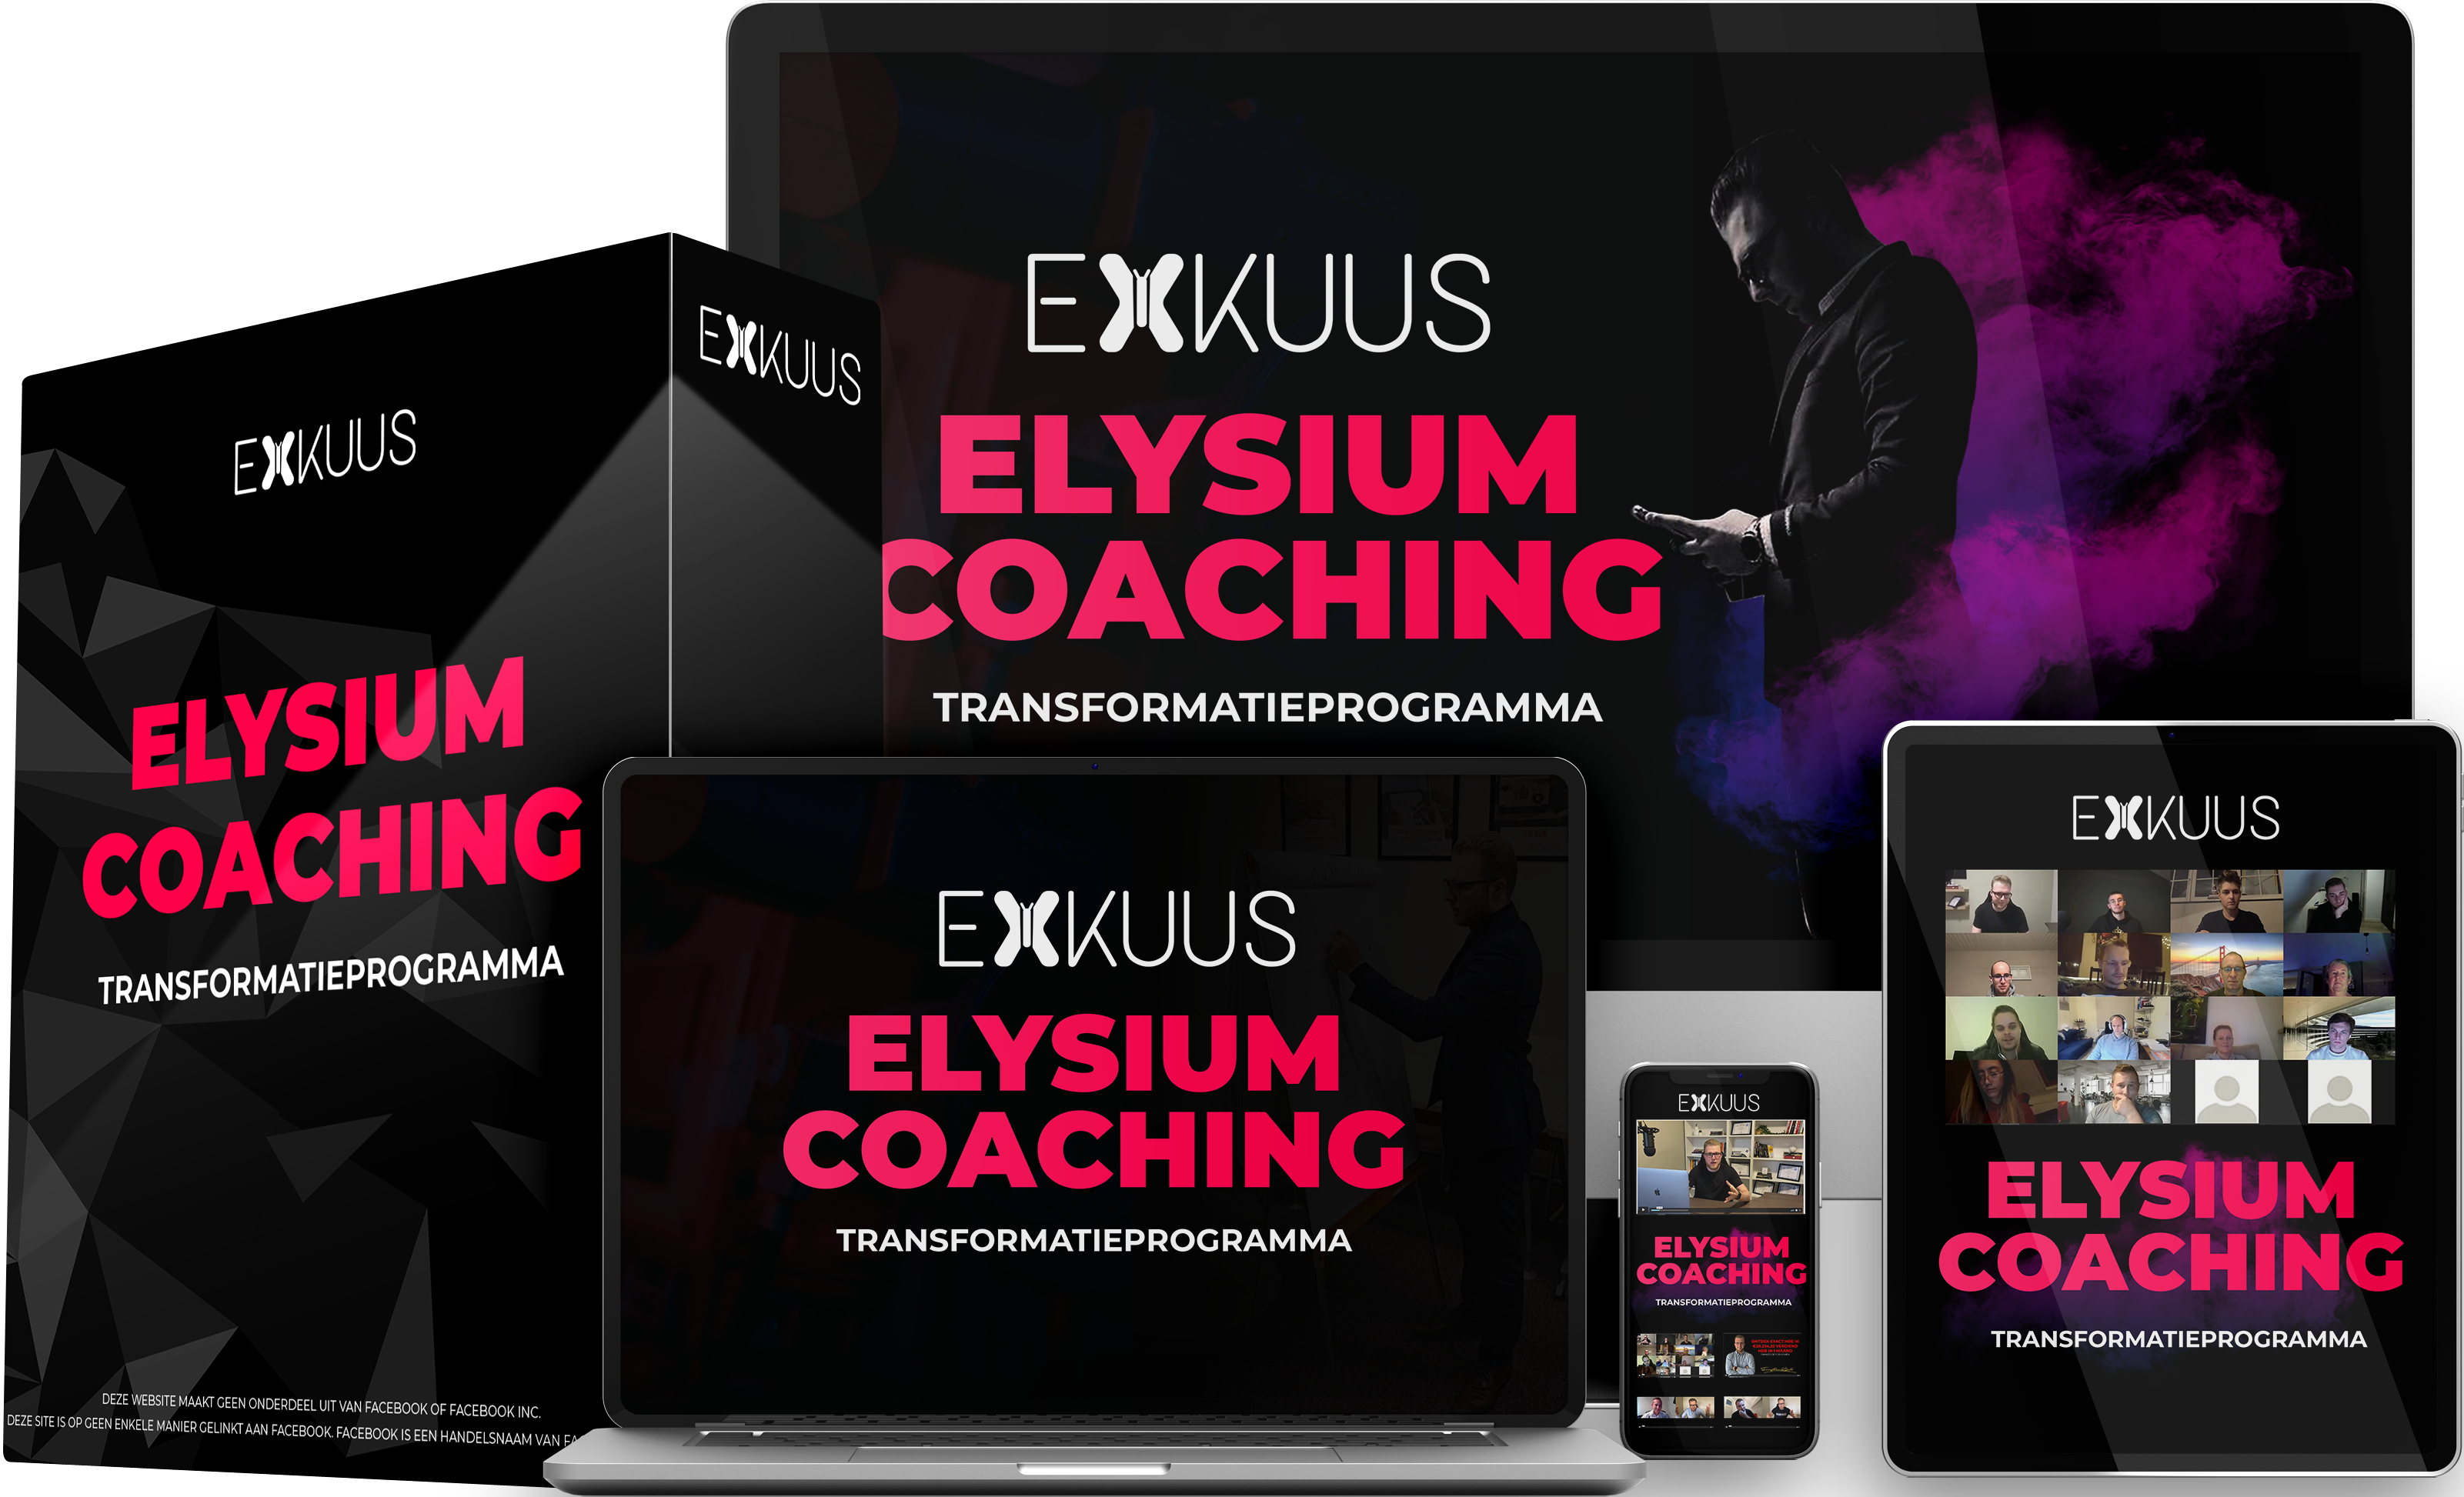 EXKUUS - Elysium Coaching Programma